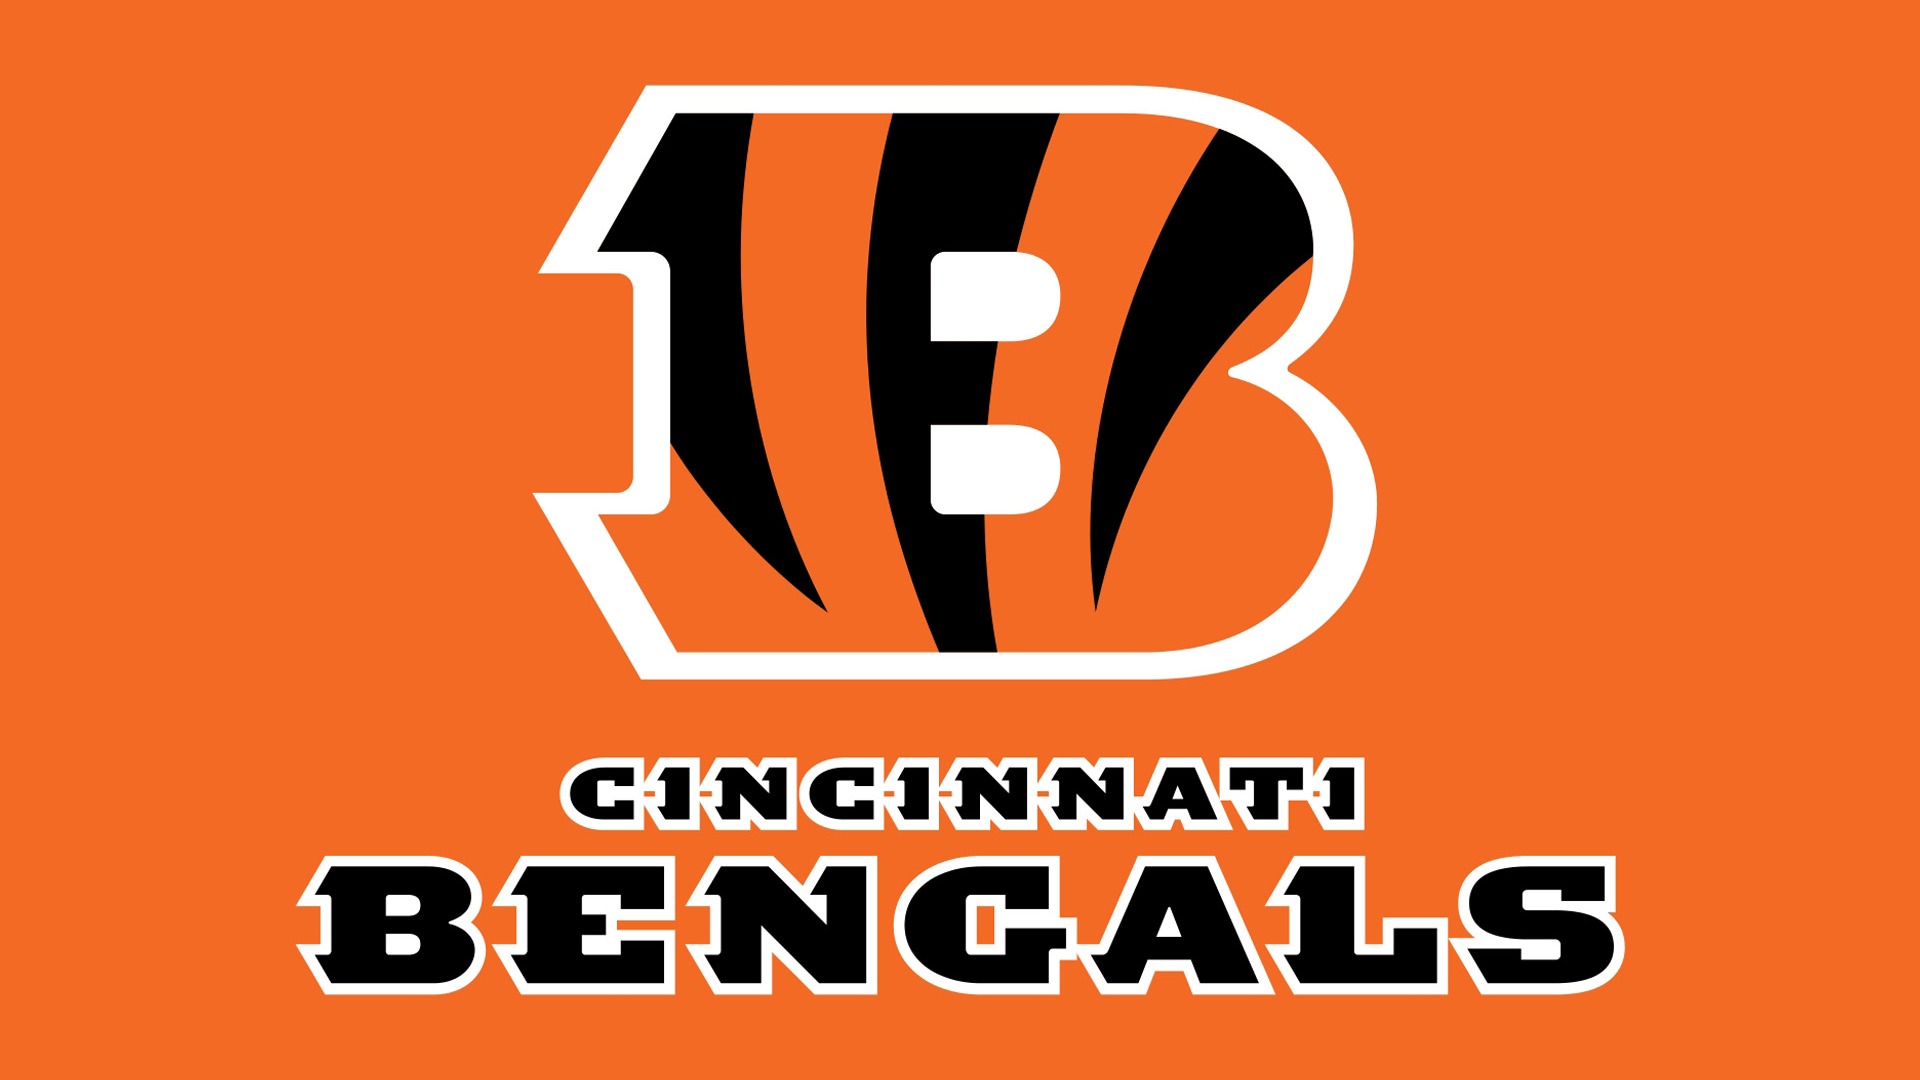 Cincinnati Bengals Logo 1920x1080 Hd Image Sports   Nfl Football